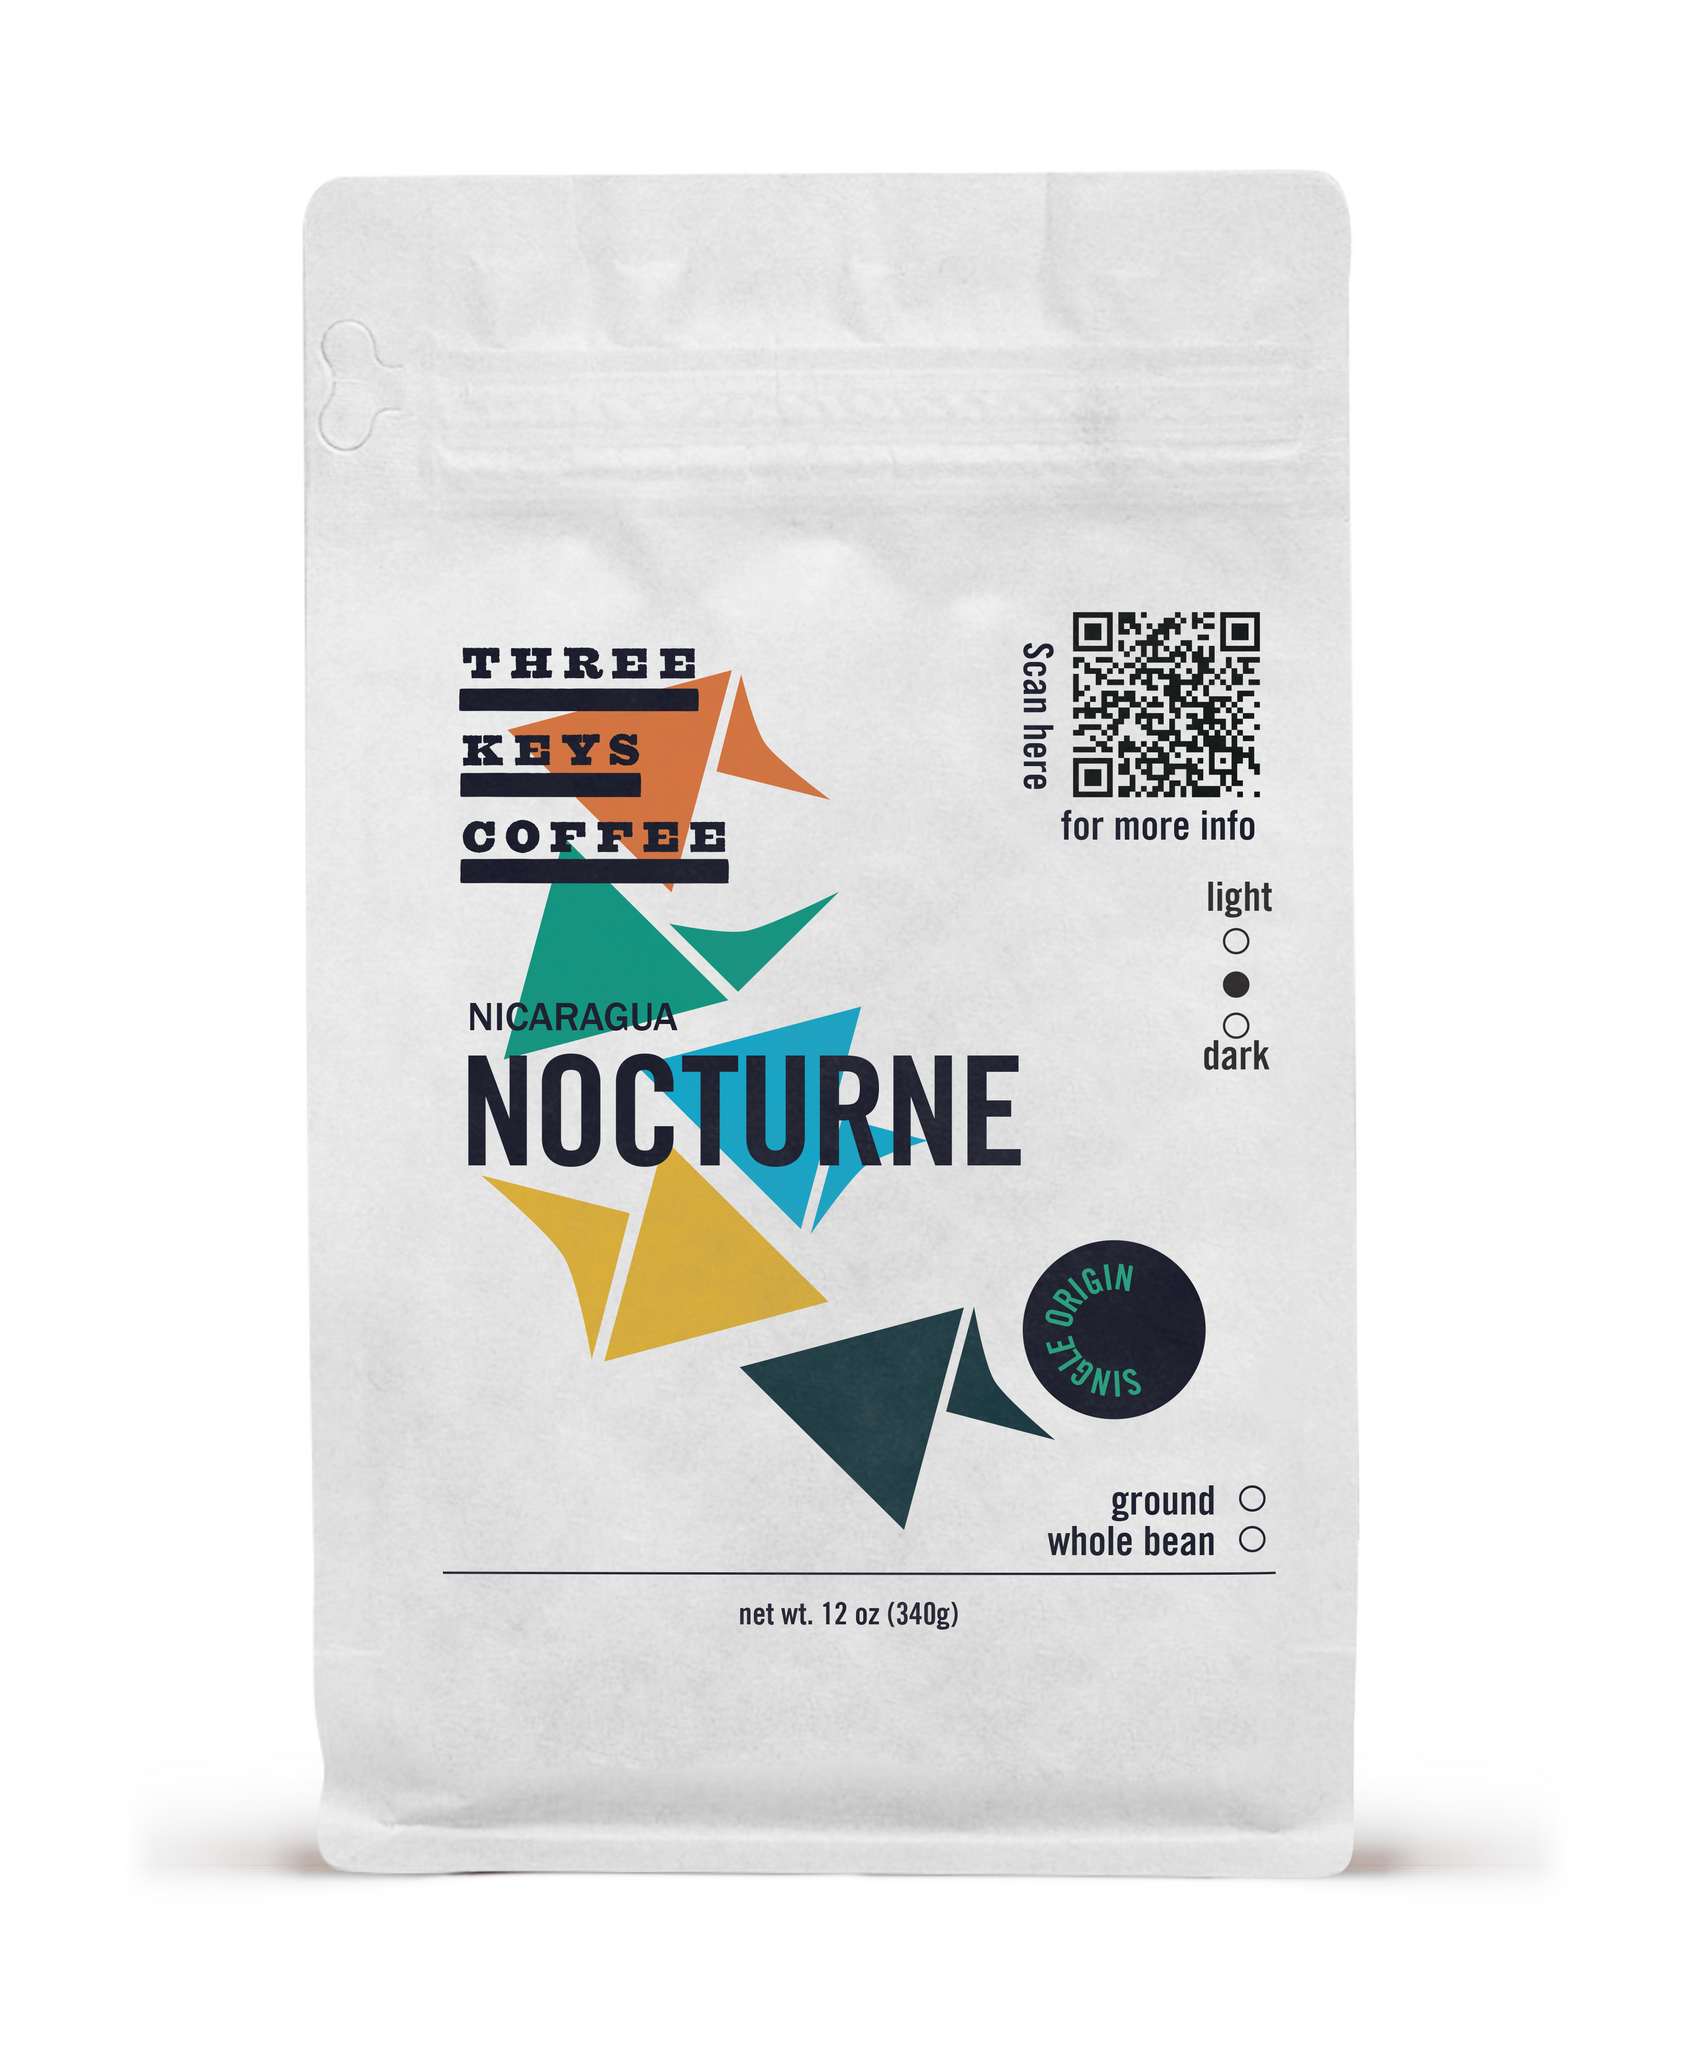 Nicaragua Natural - "Nocturne" (Wholesale)